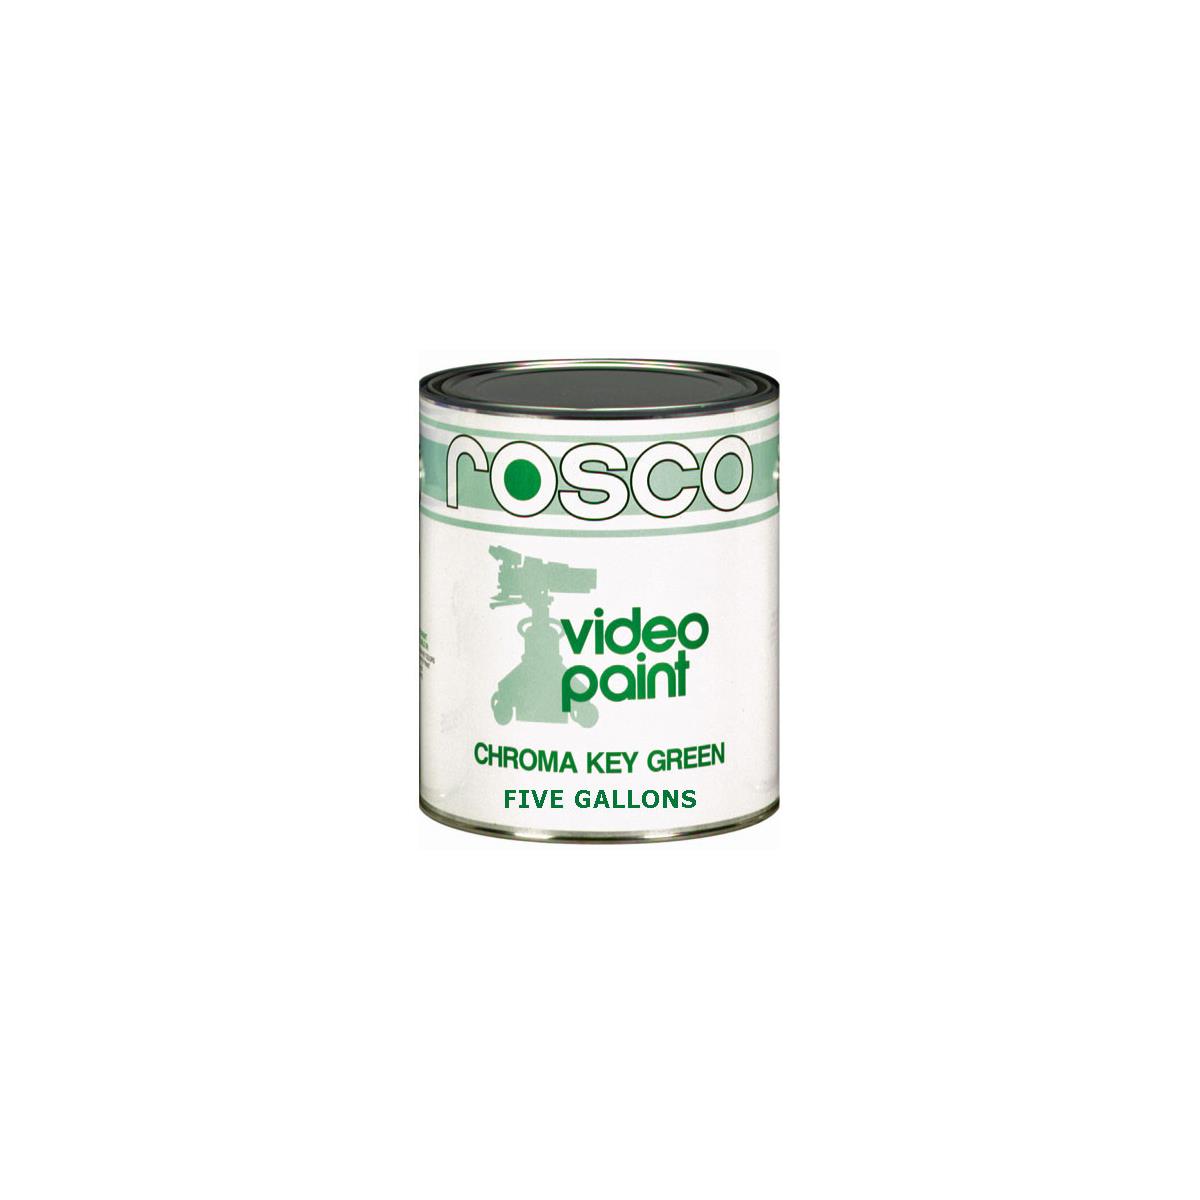 Image of Rosco Chroma Key Matte Green Paint - 5 Gallon